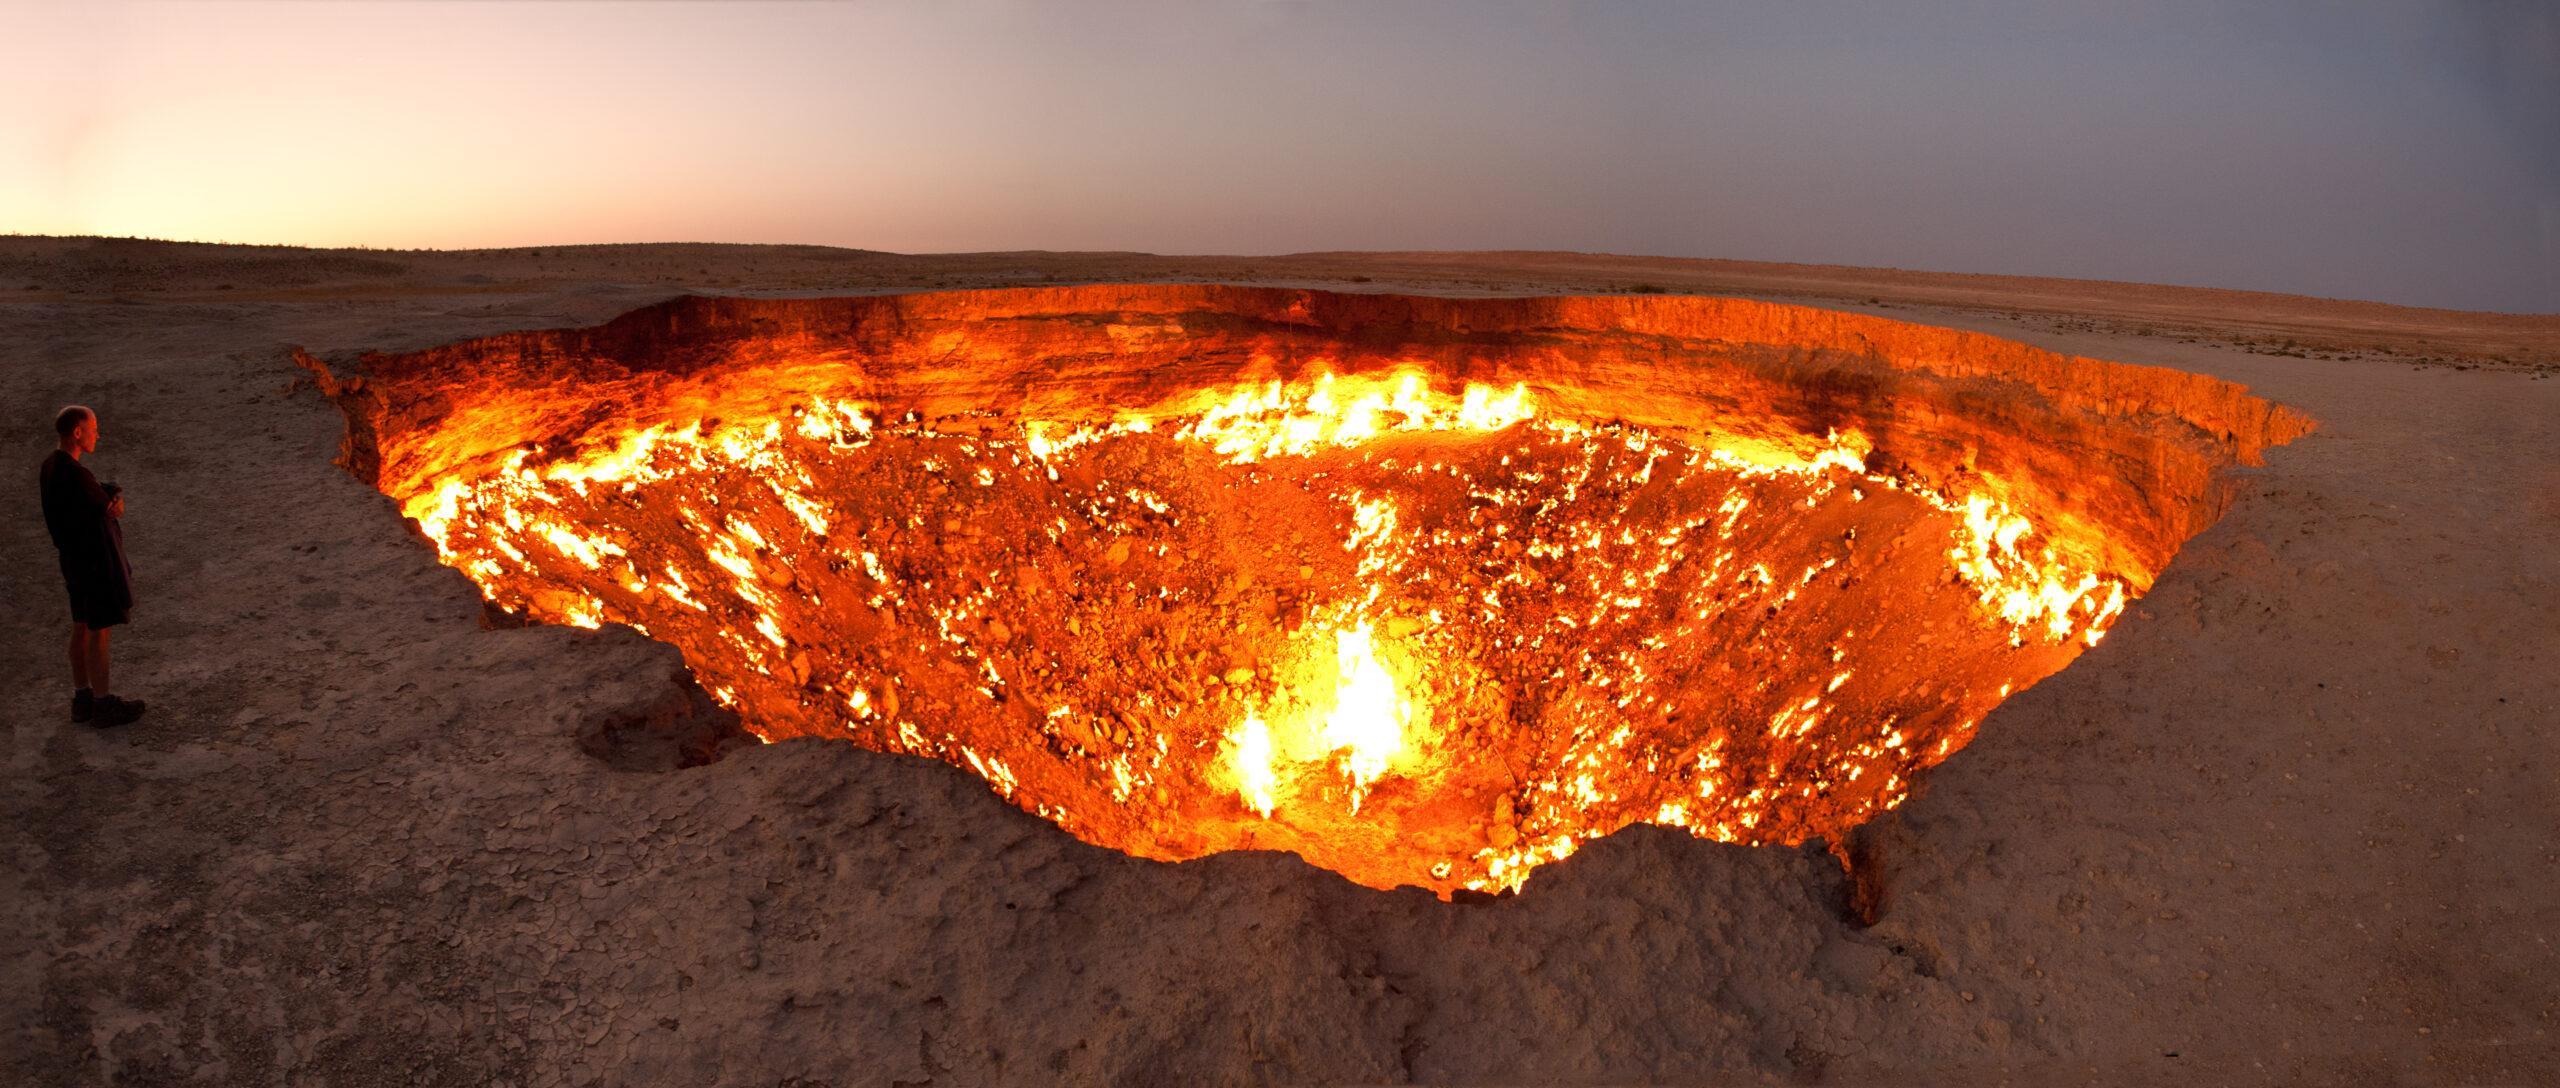 Darvasa gas crater panorama scaled صنعت توریسم و گردشگری